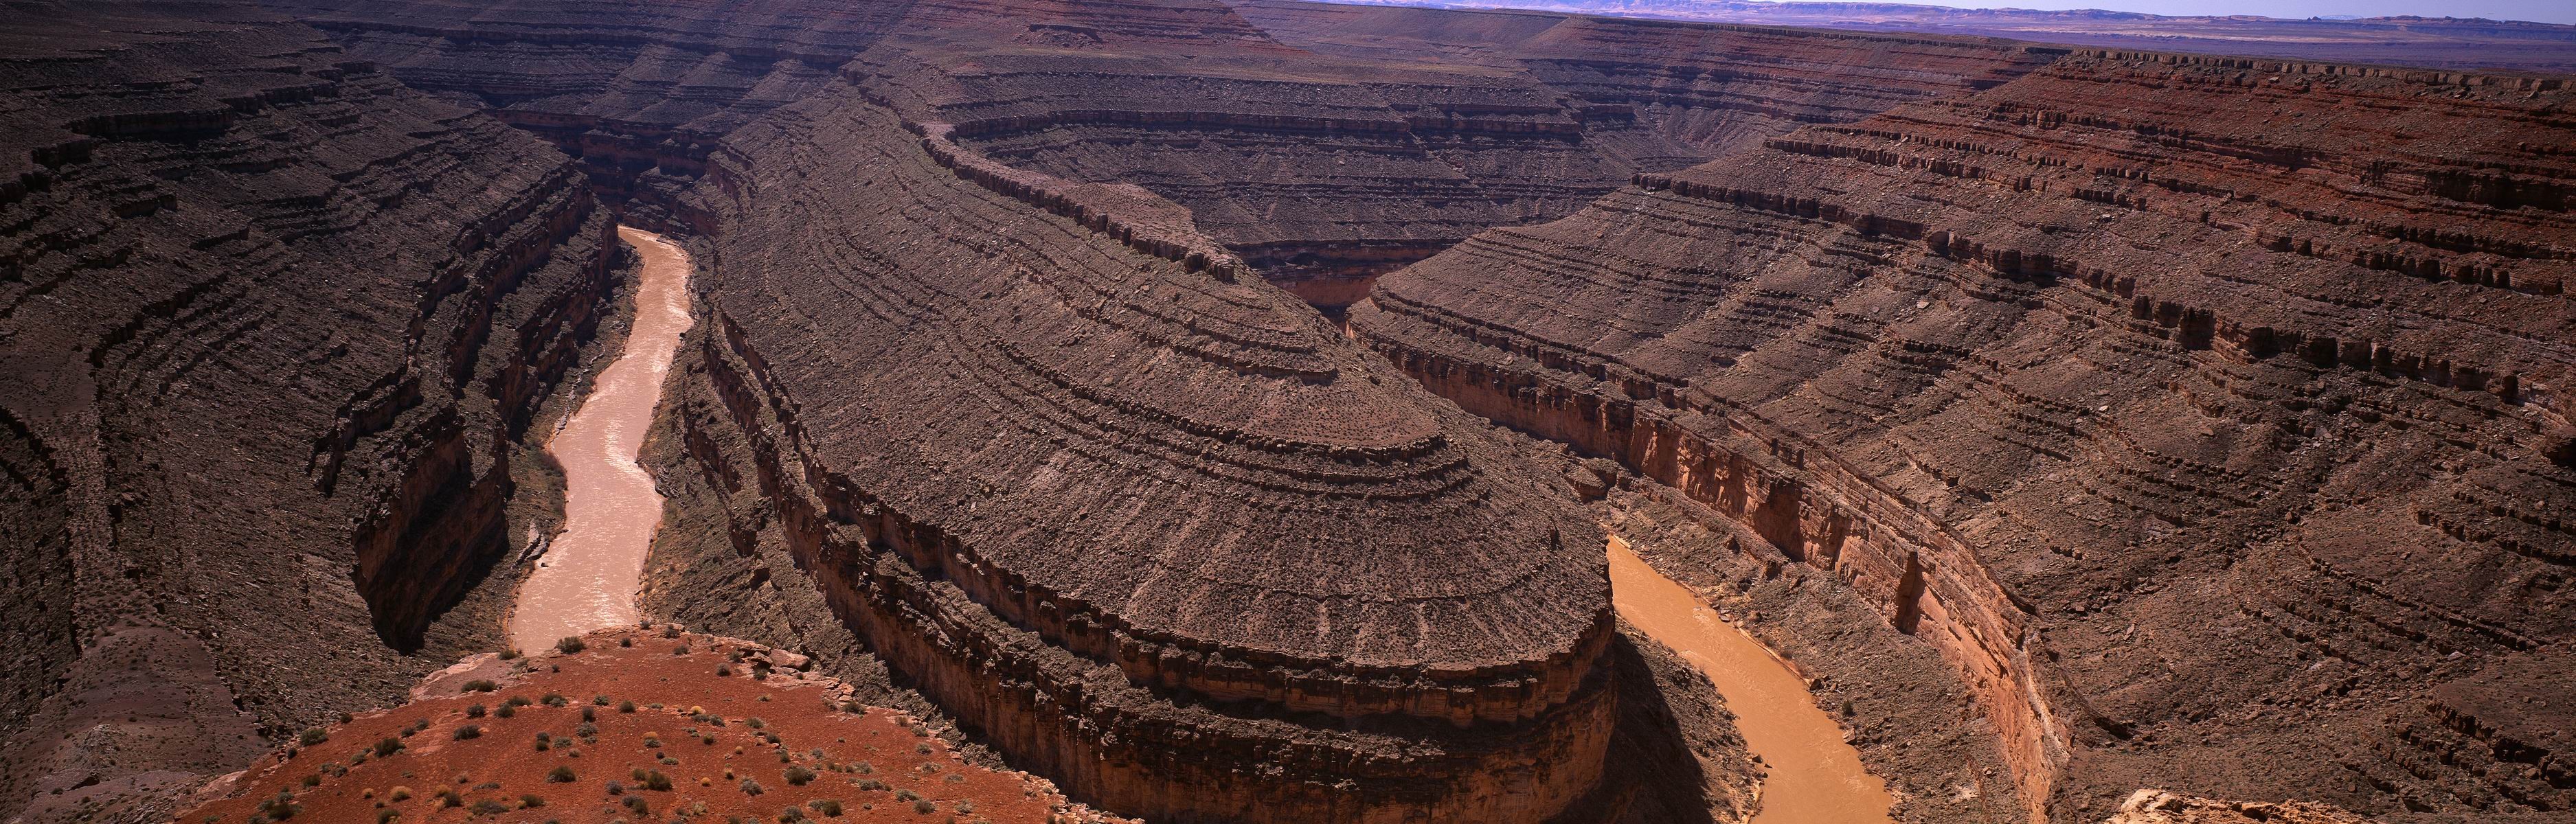 Landscape Rock Formation Canyon Horseshoe Canyon Grand Canyon National Park Arizona USA 3750x1200